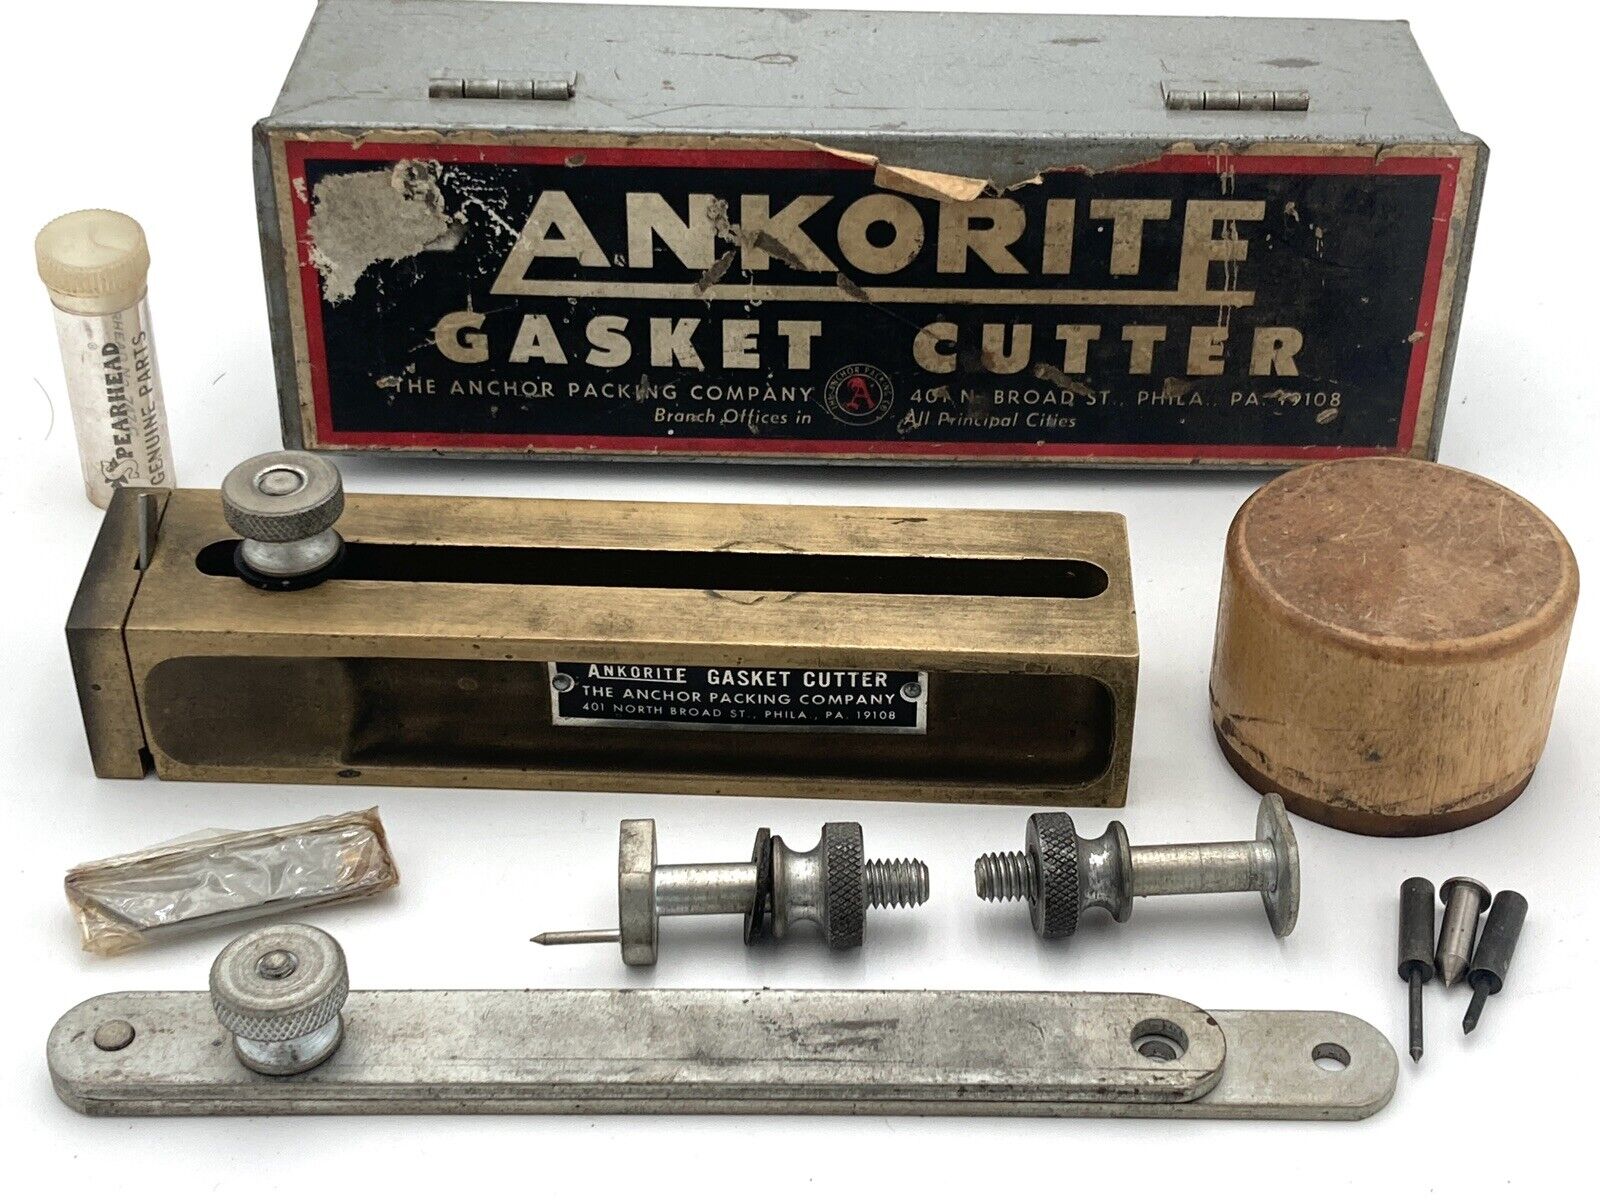 Vtg Ankorite Gasket Cutter Original Metal Box USA